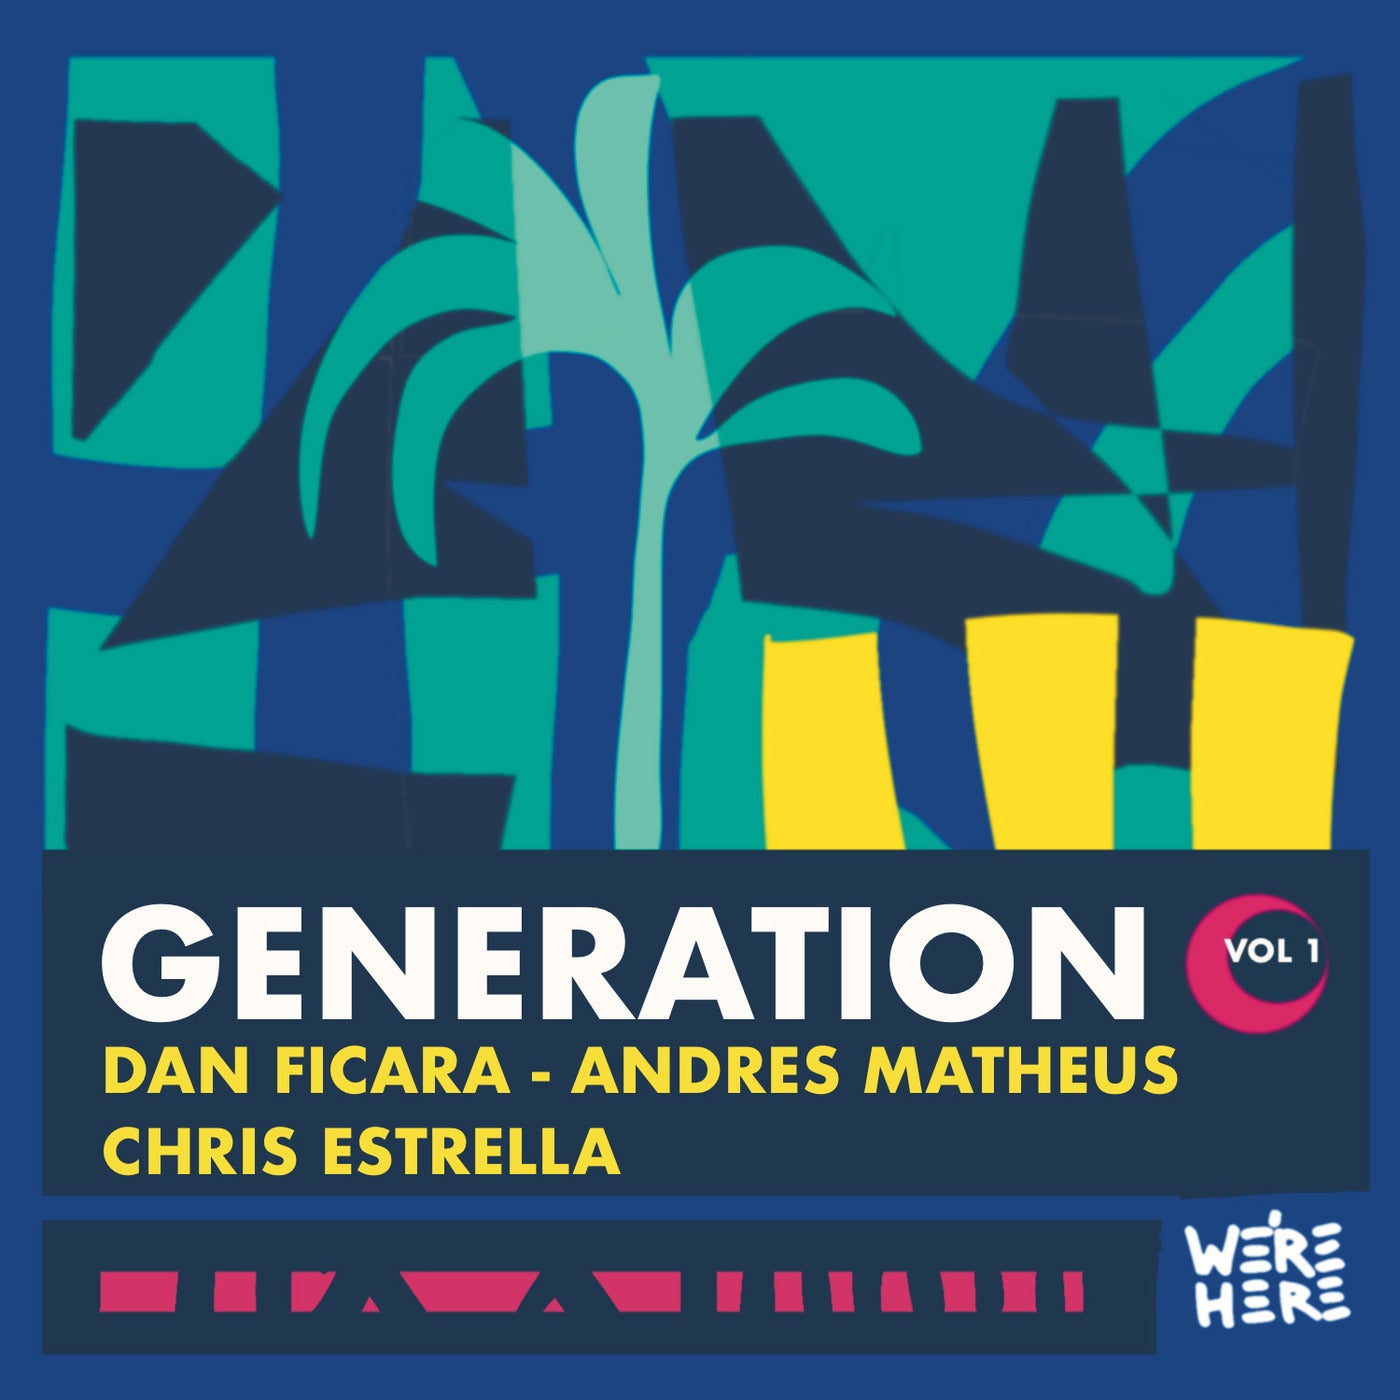 Pablo Fierro, Dan Ficara, Andres Matheus, Chris Estrella - Generation Vol.1 on WE'RE HERE